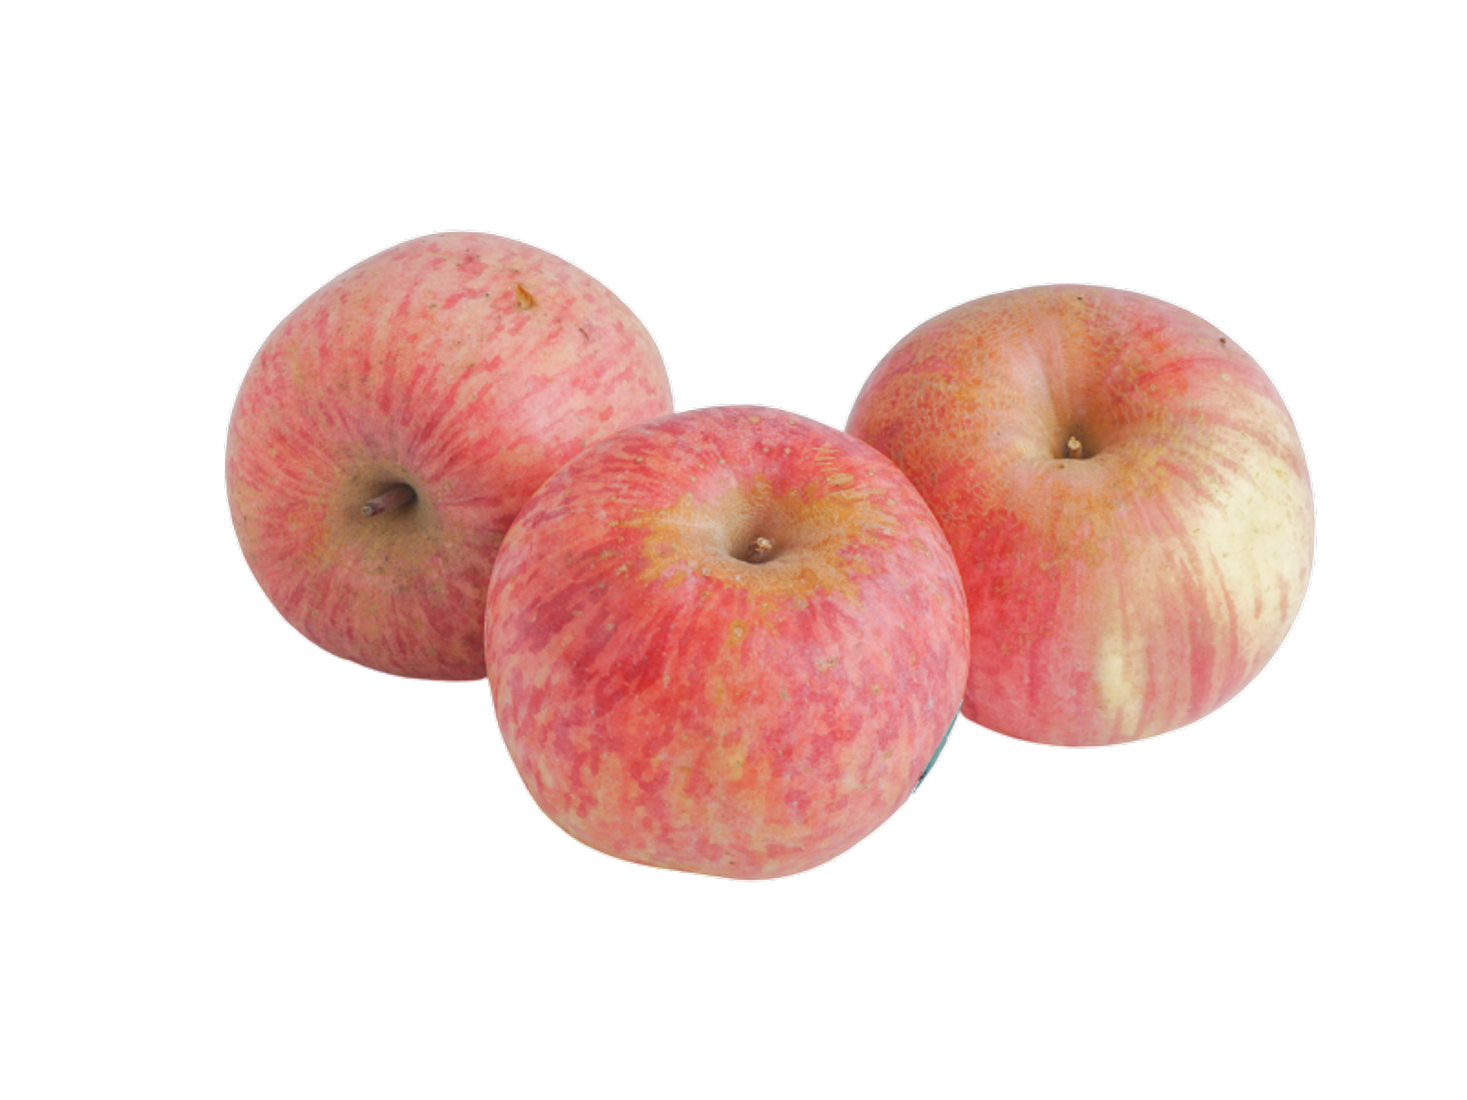 https://pinemelon.com/image/f/14080-ela_family_farm_fuji_apples_1_lb.jpg?w=1100&h=1100&_c=1703784125